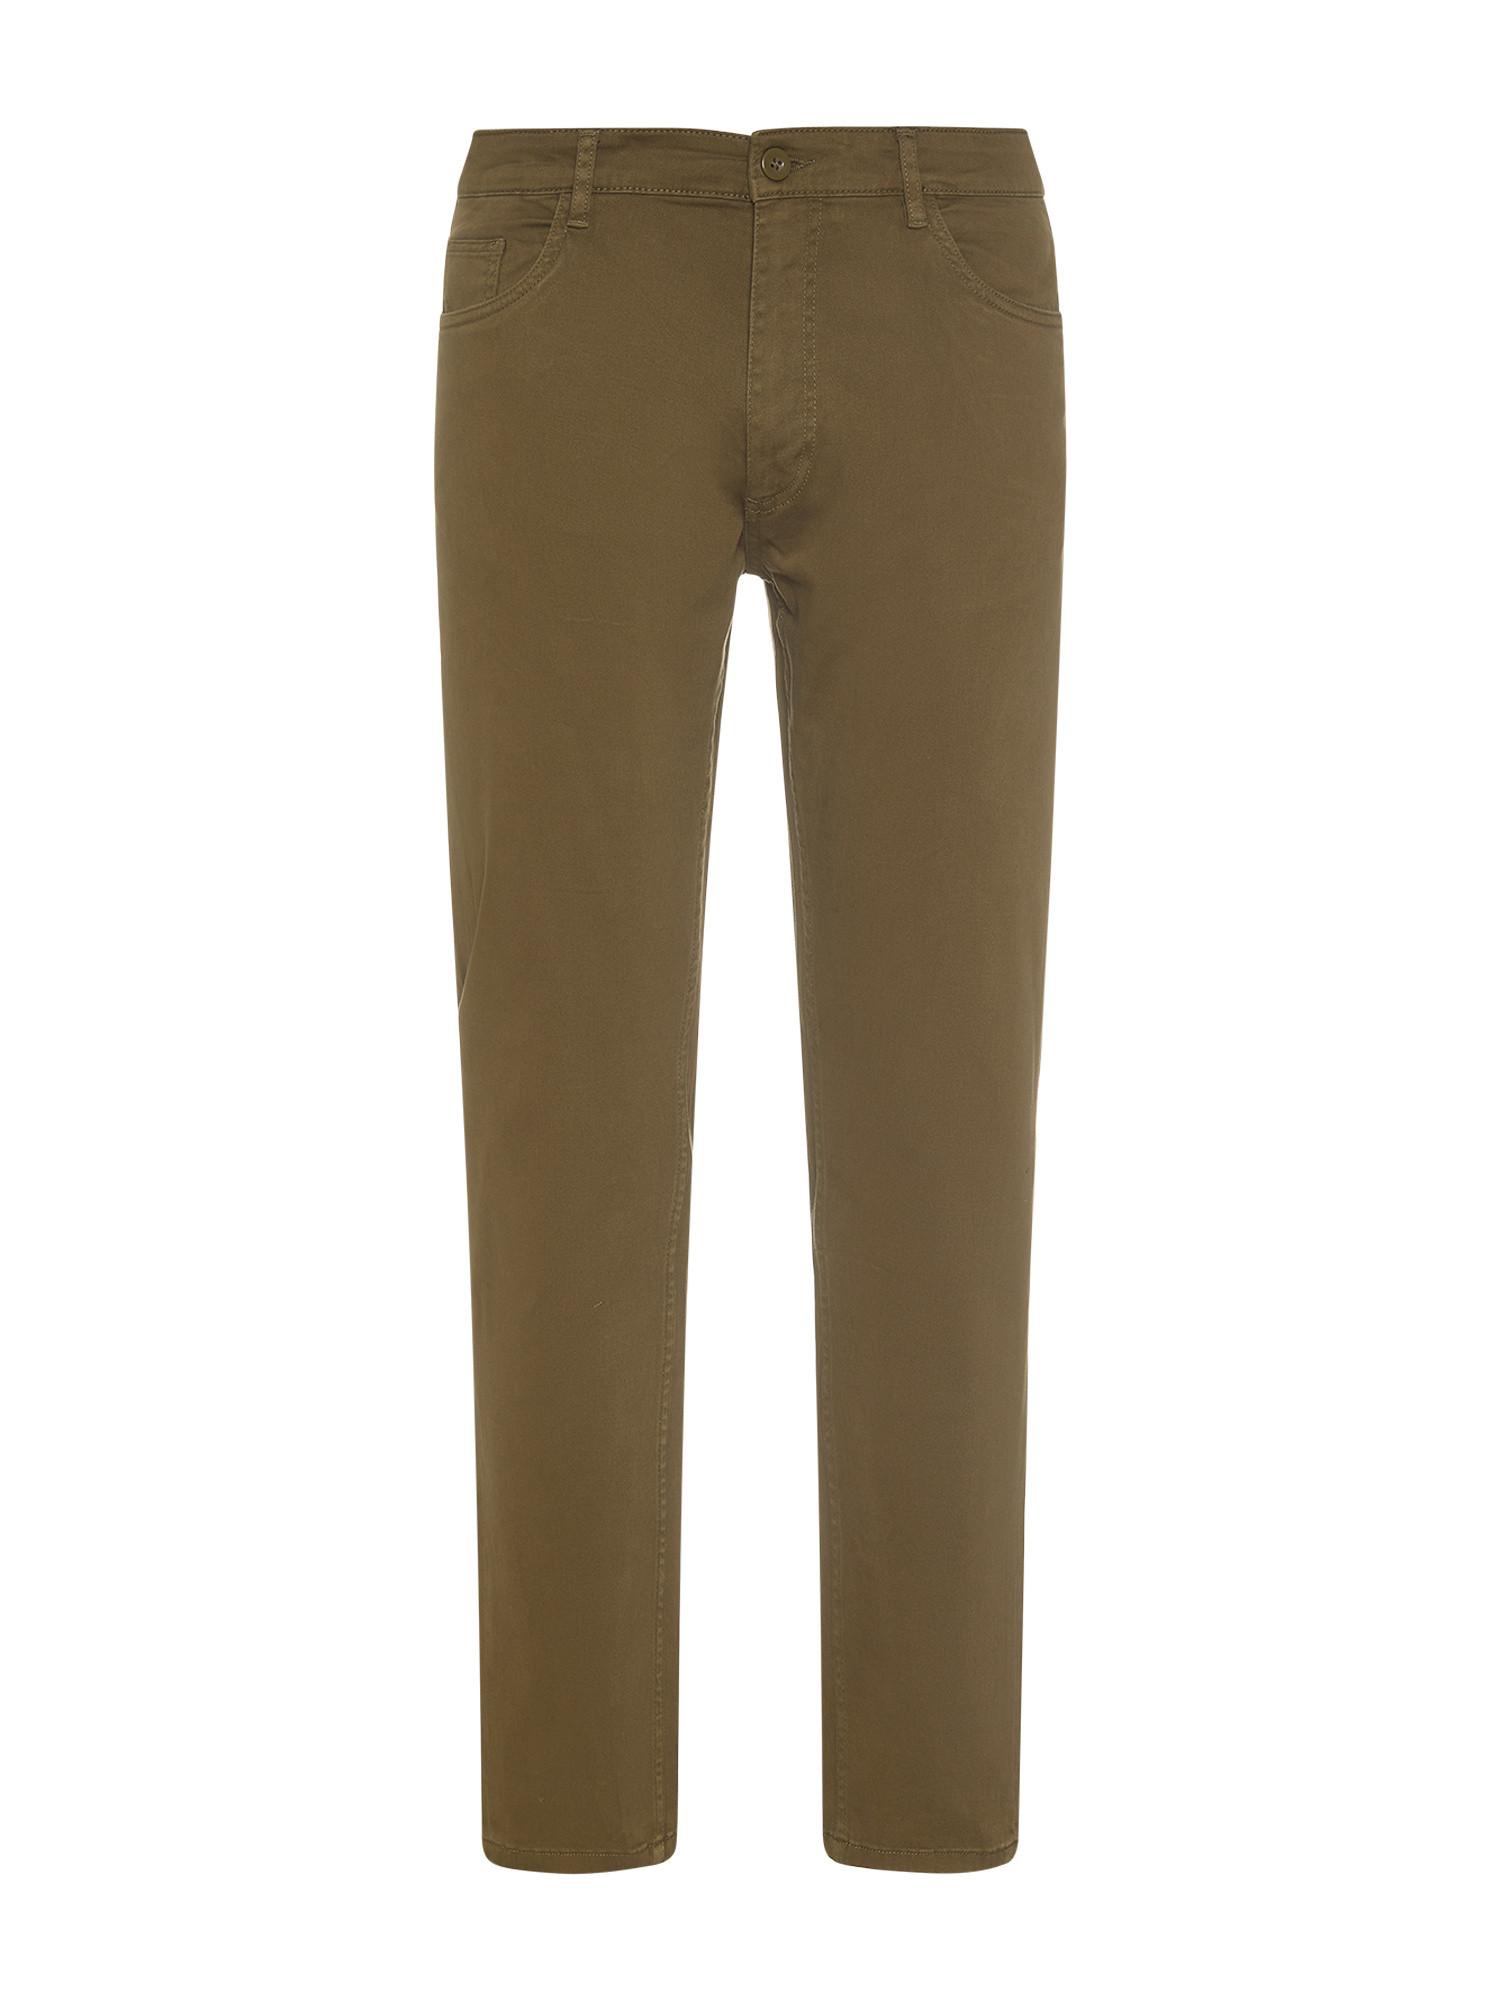 JCT - Slim fit five pocket trousers, Green, large image number 0